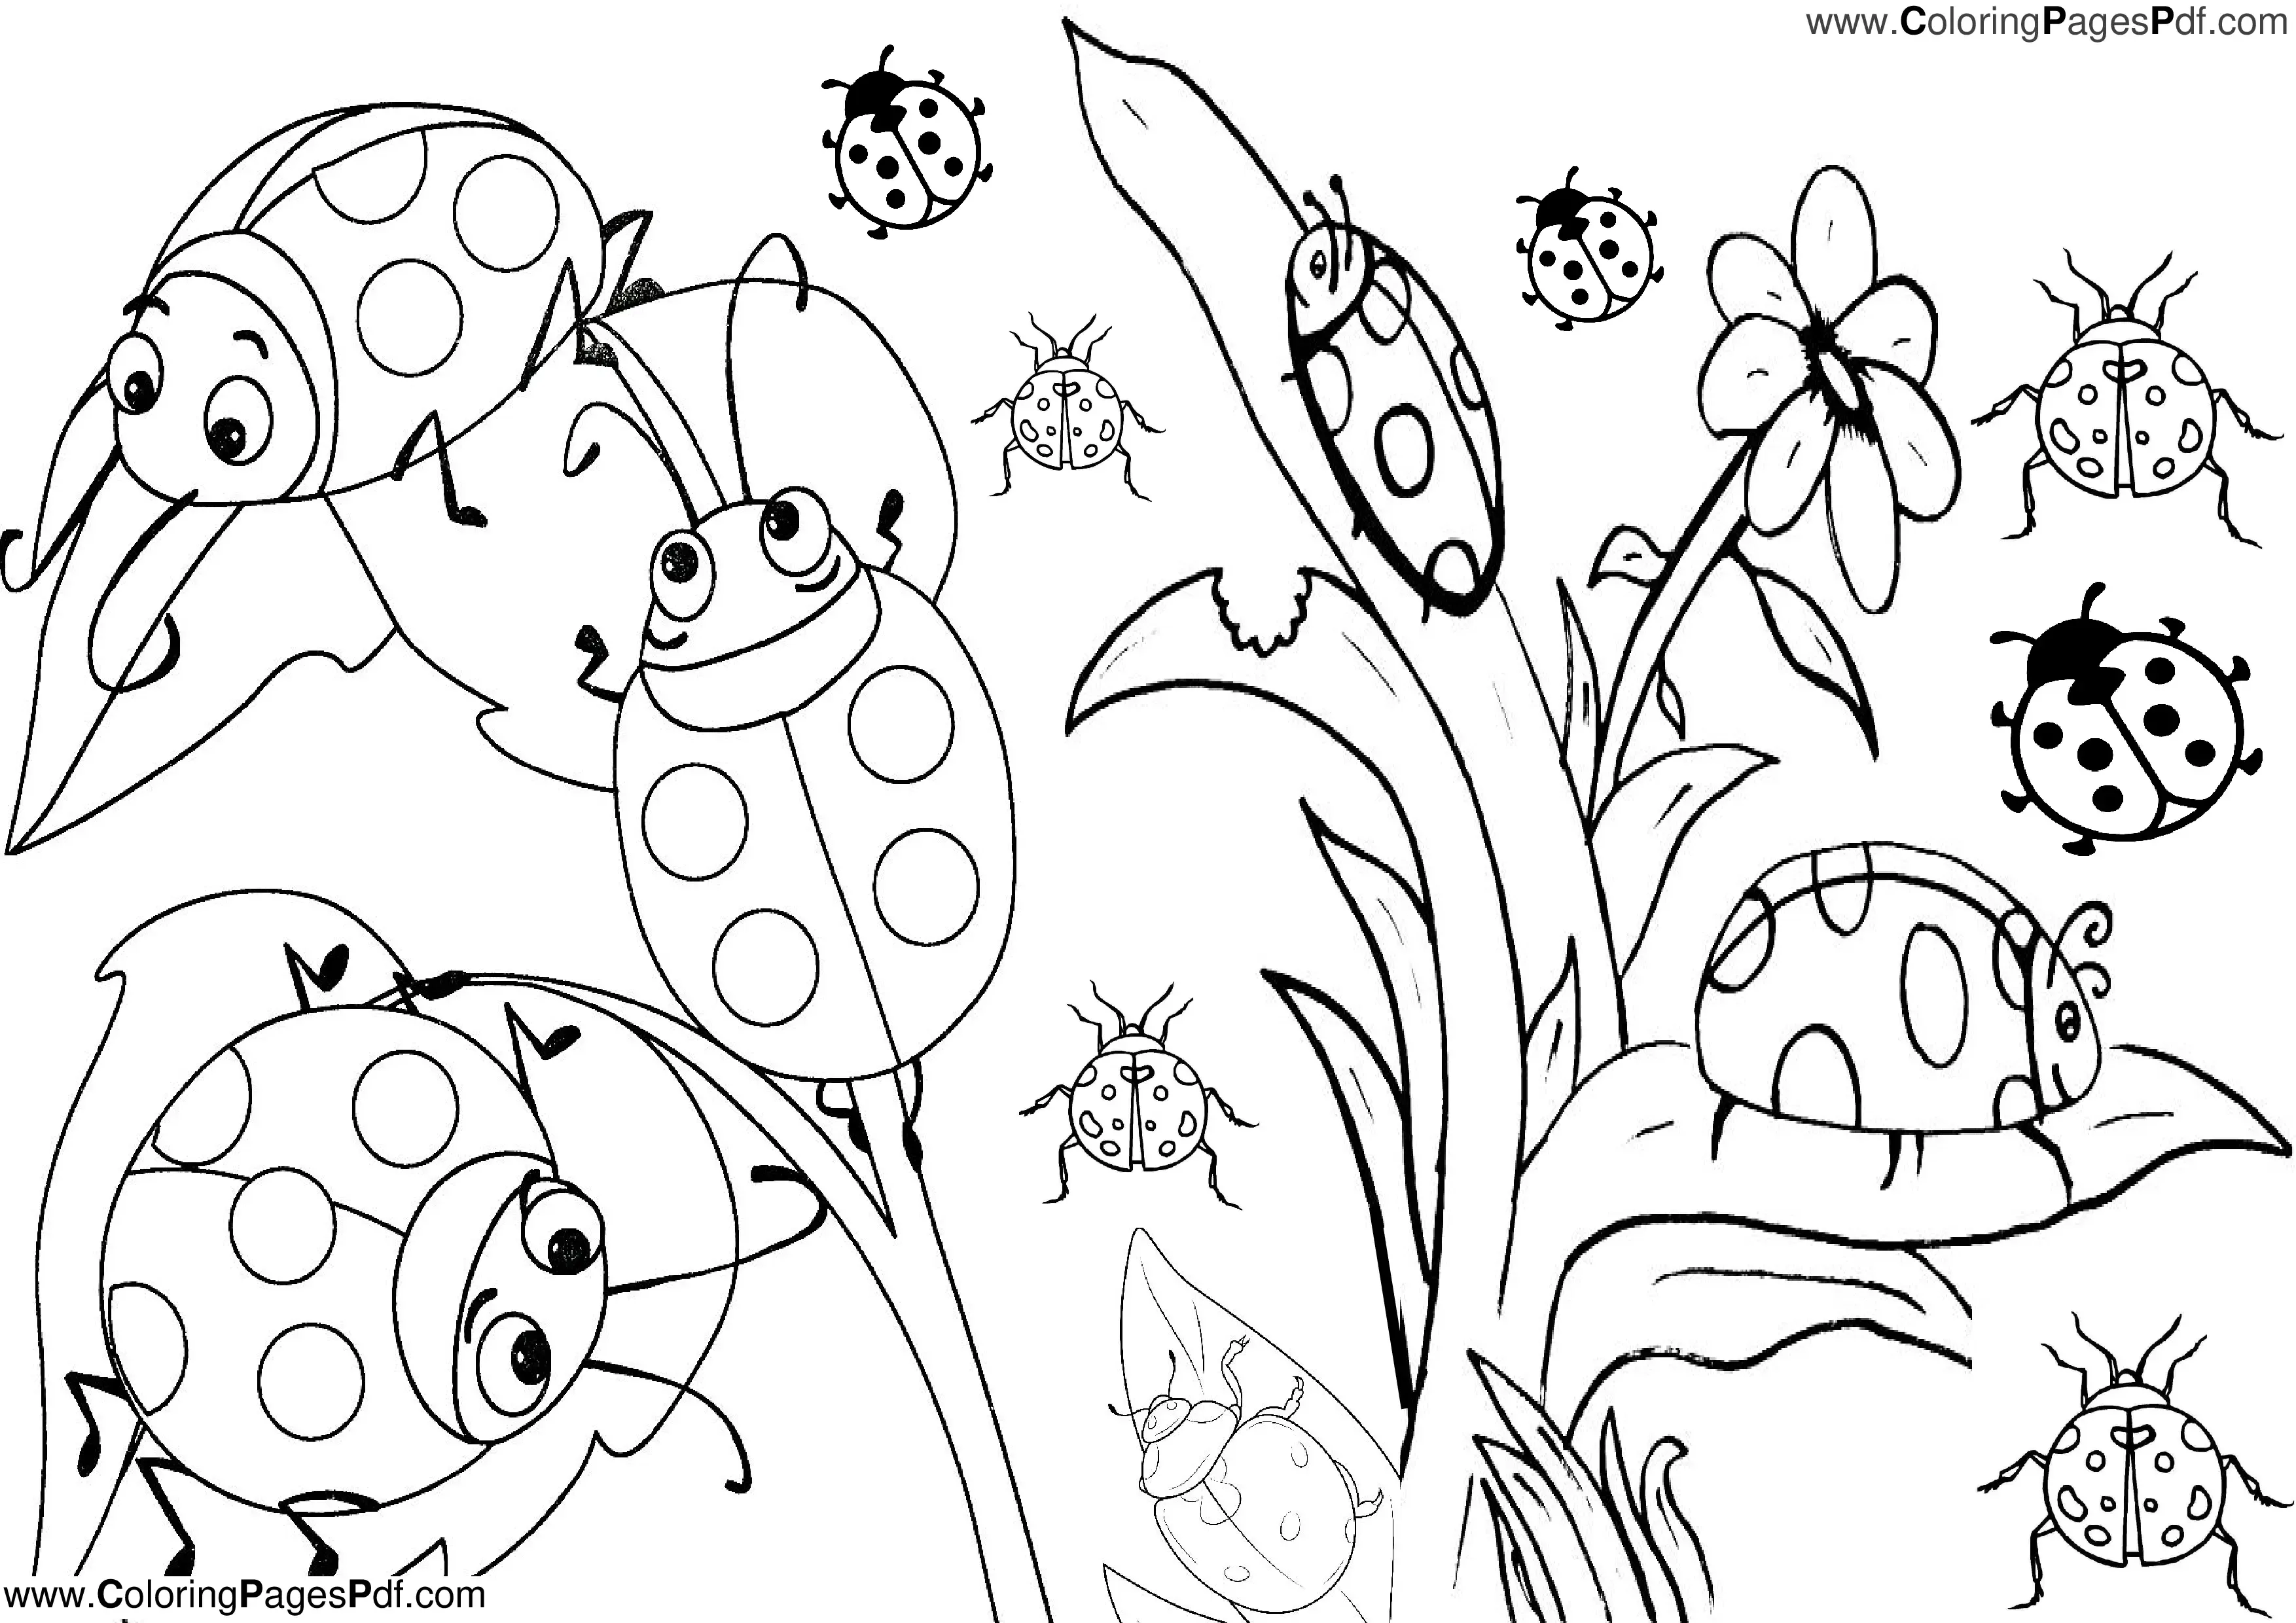 Ladybug coloring page PDF